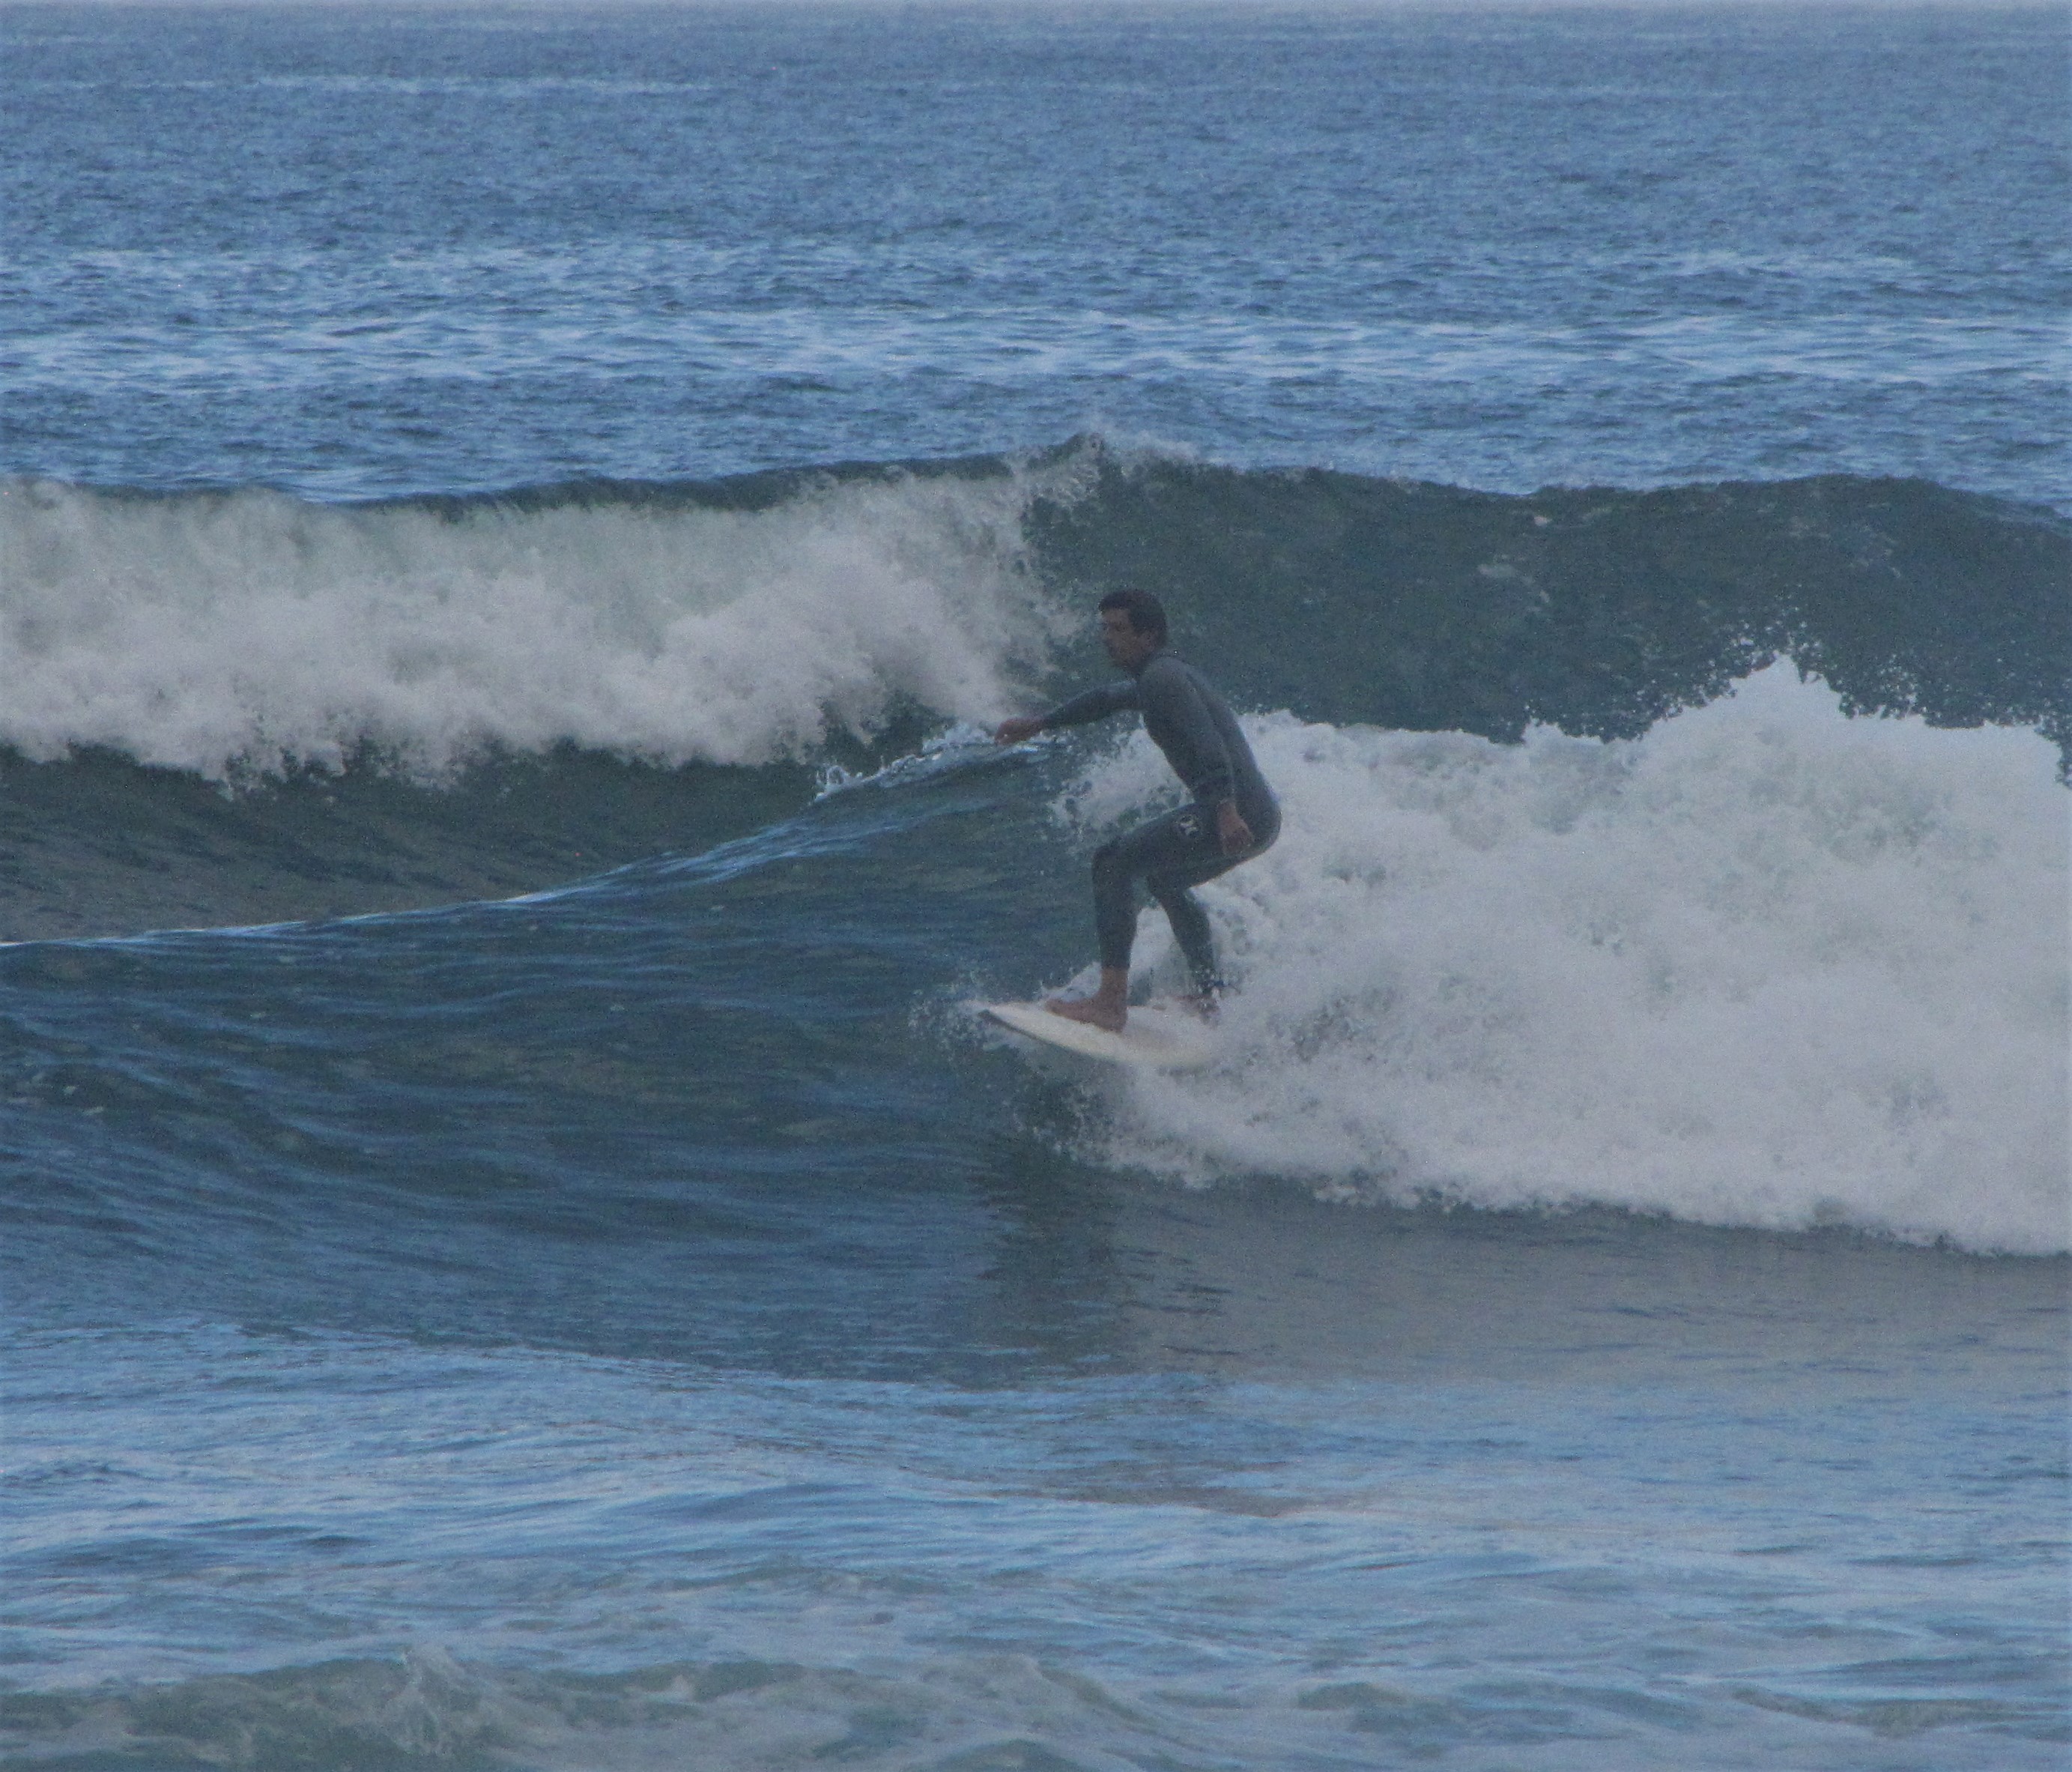 daniel surfing a wave in arrifana